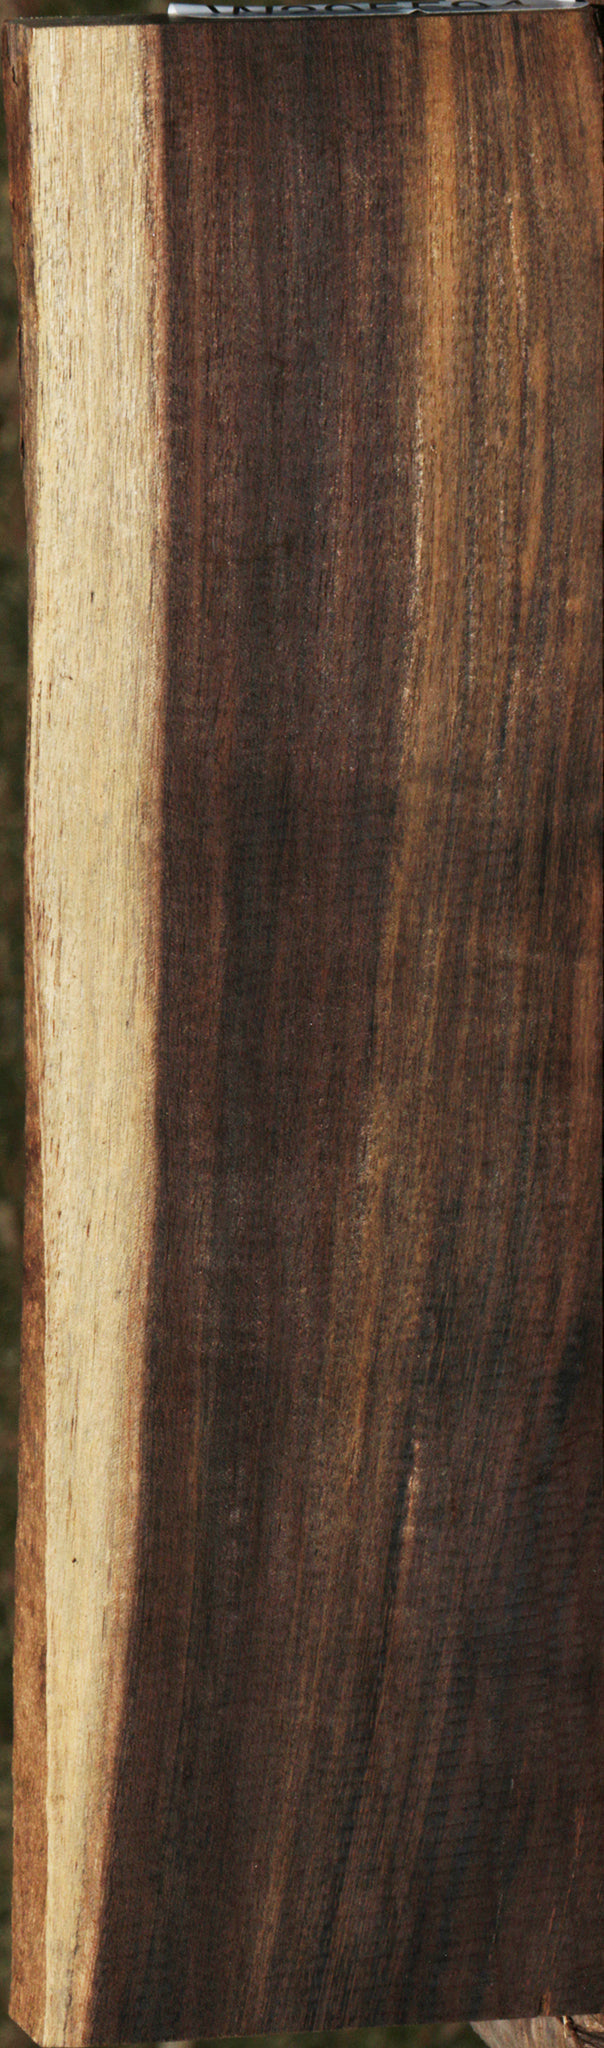 Leadwood Live Edge Lumber